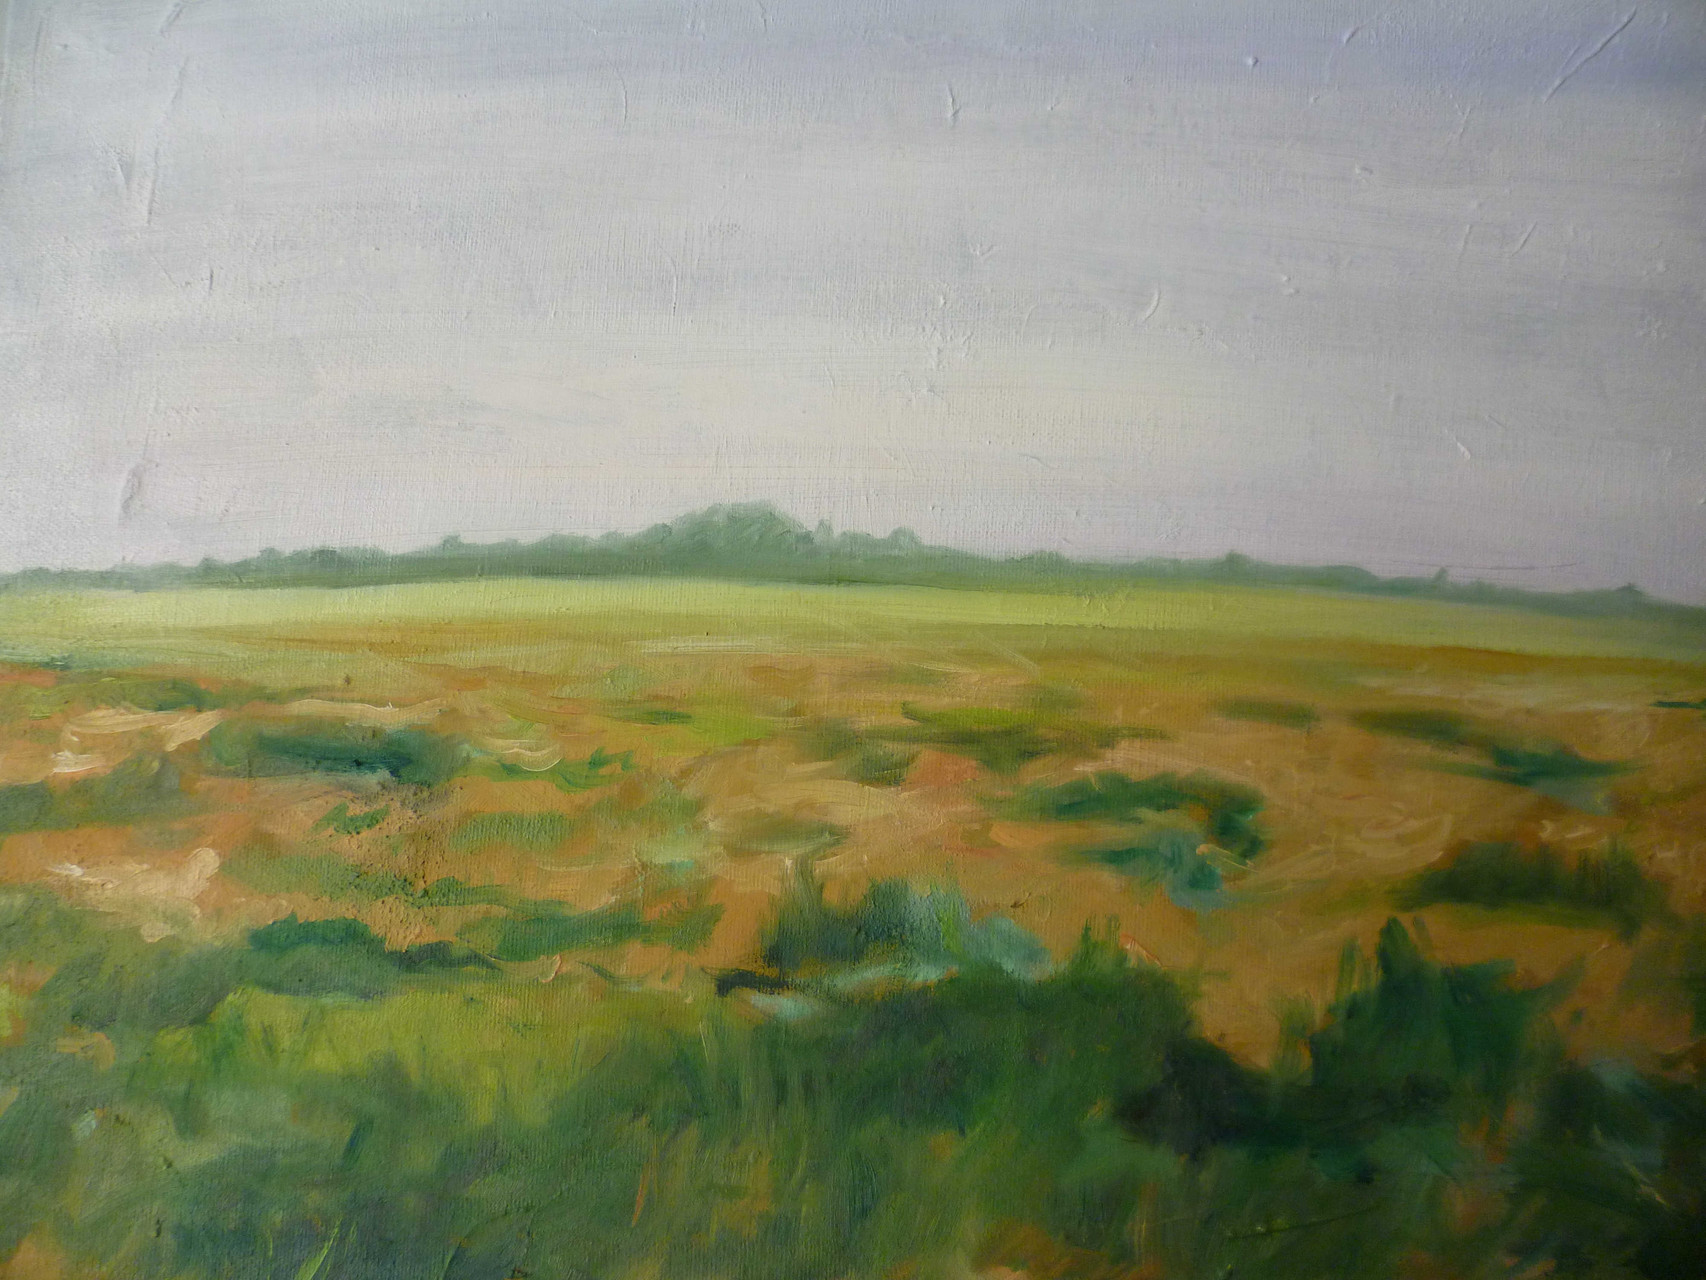 Landschaft (Nordholz), Öl auf Leinwand, 2011, 40 x 50 cm